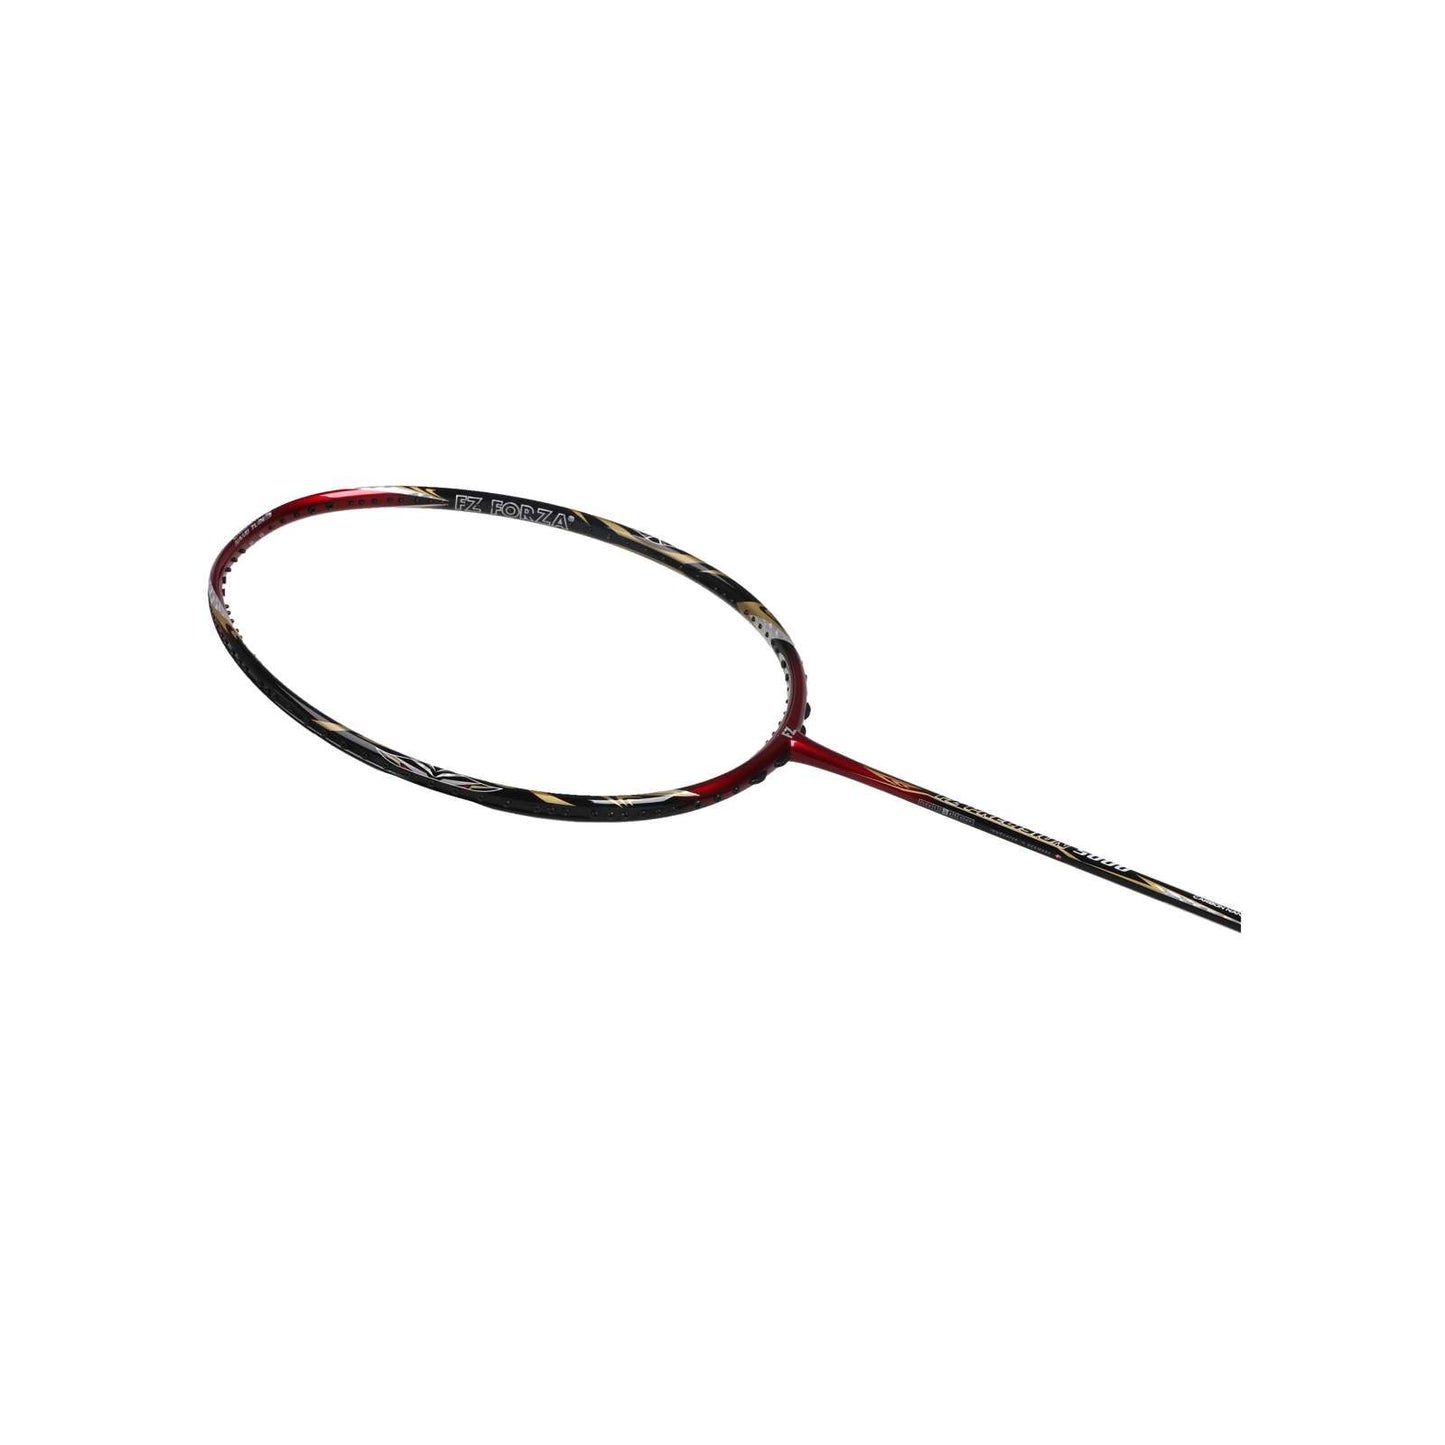 FZ Forza Precision 5000 Badminton Racket - Black Red